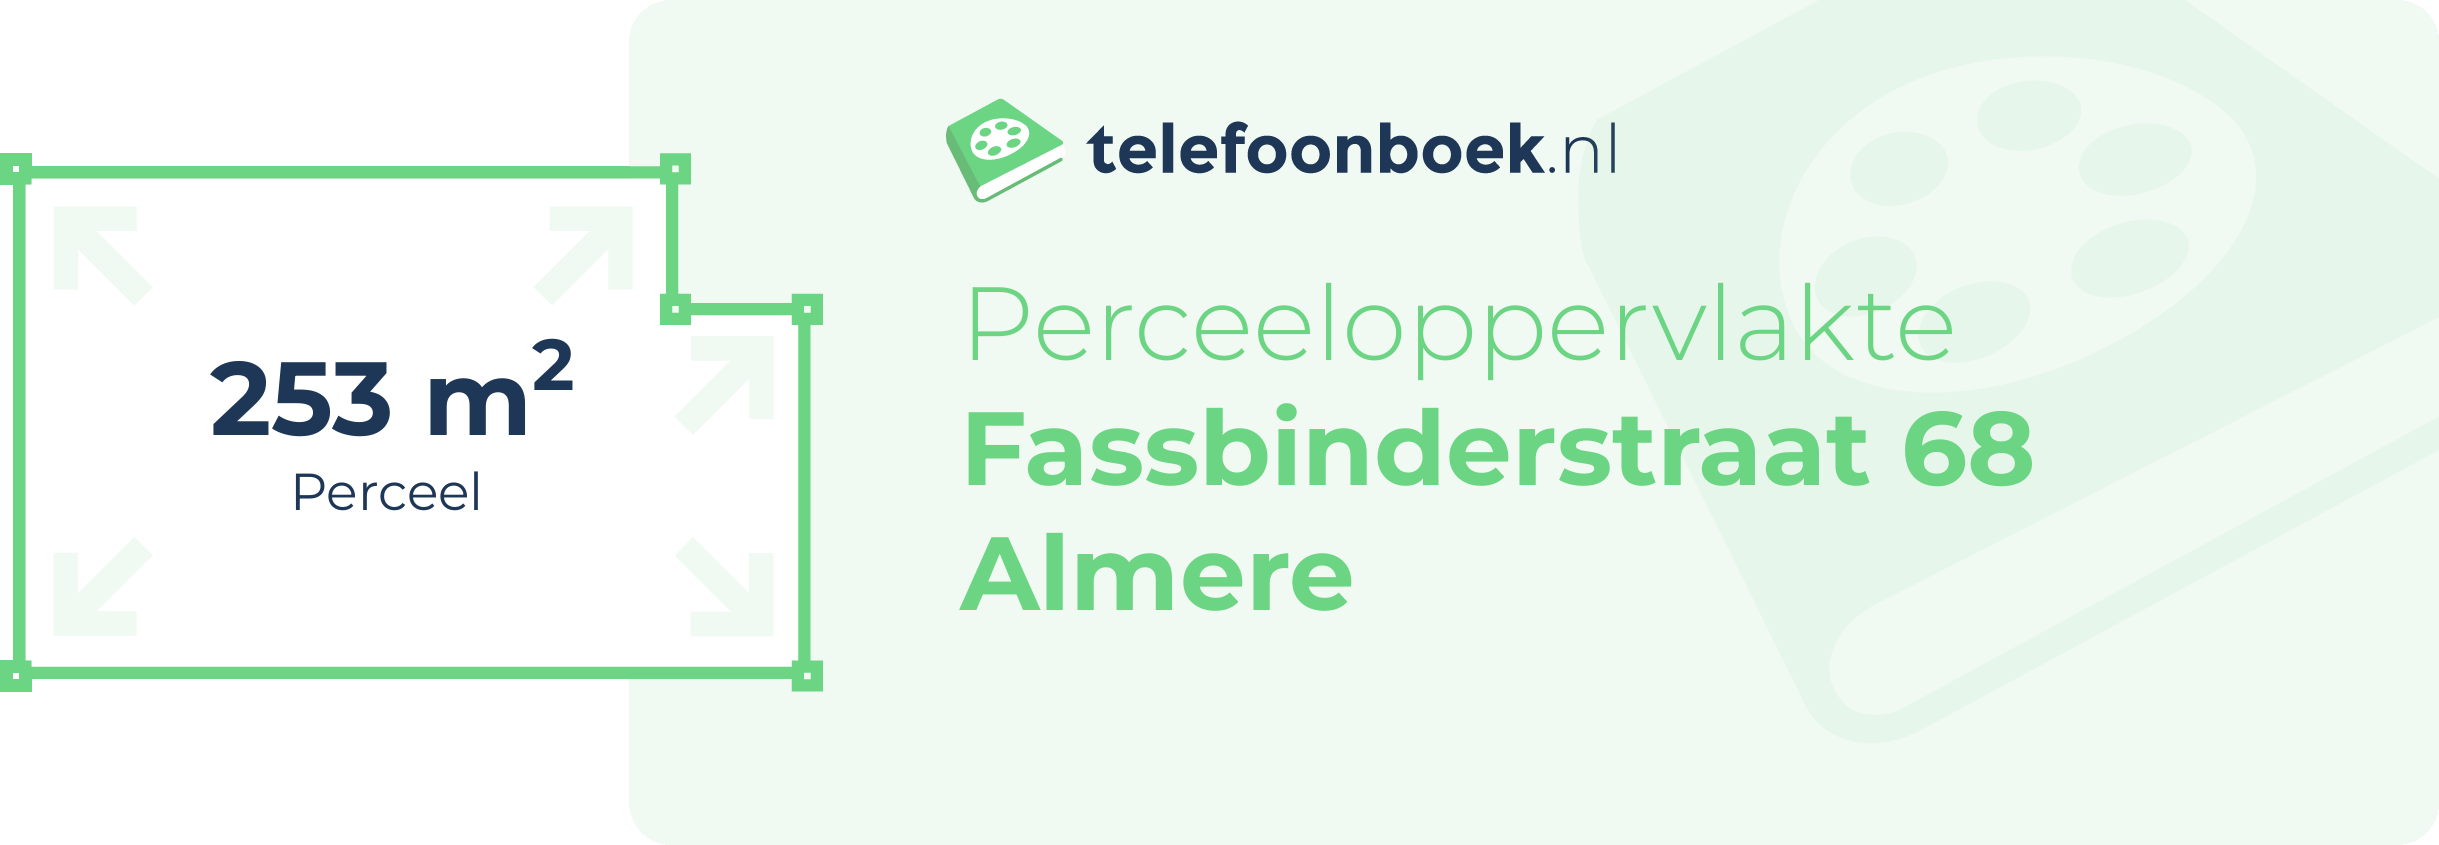 Perceeloppervlakte Fassbinderstraat 68 Almere